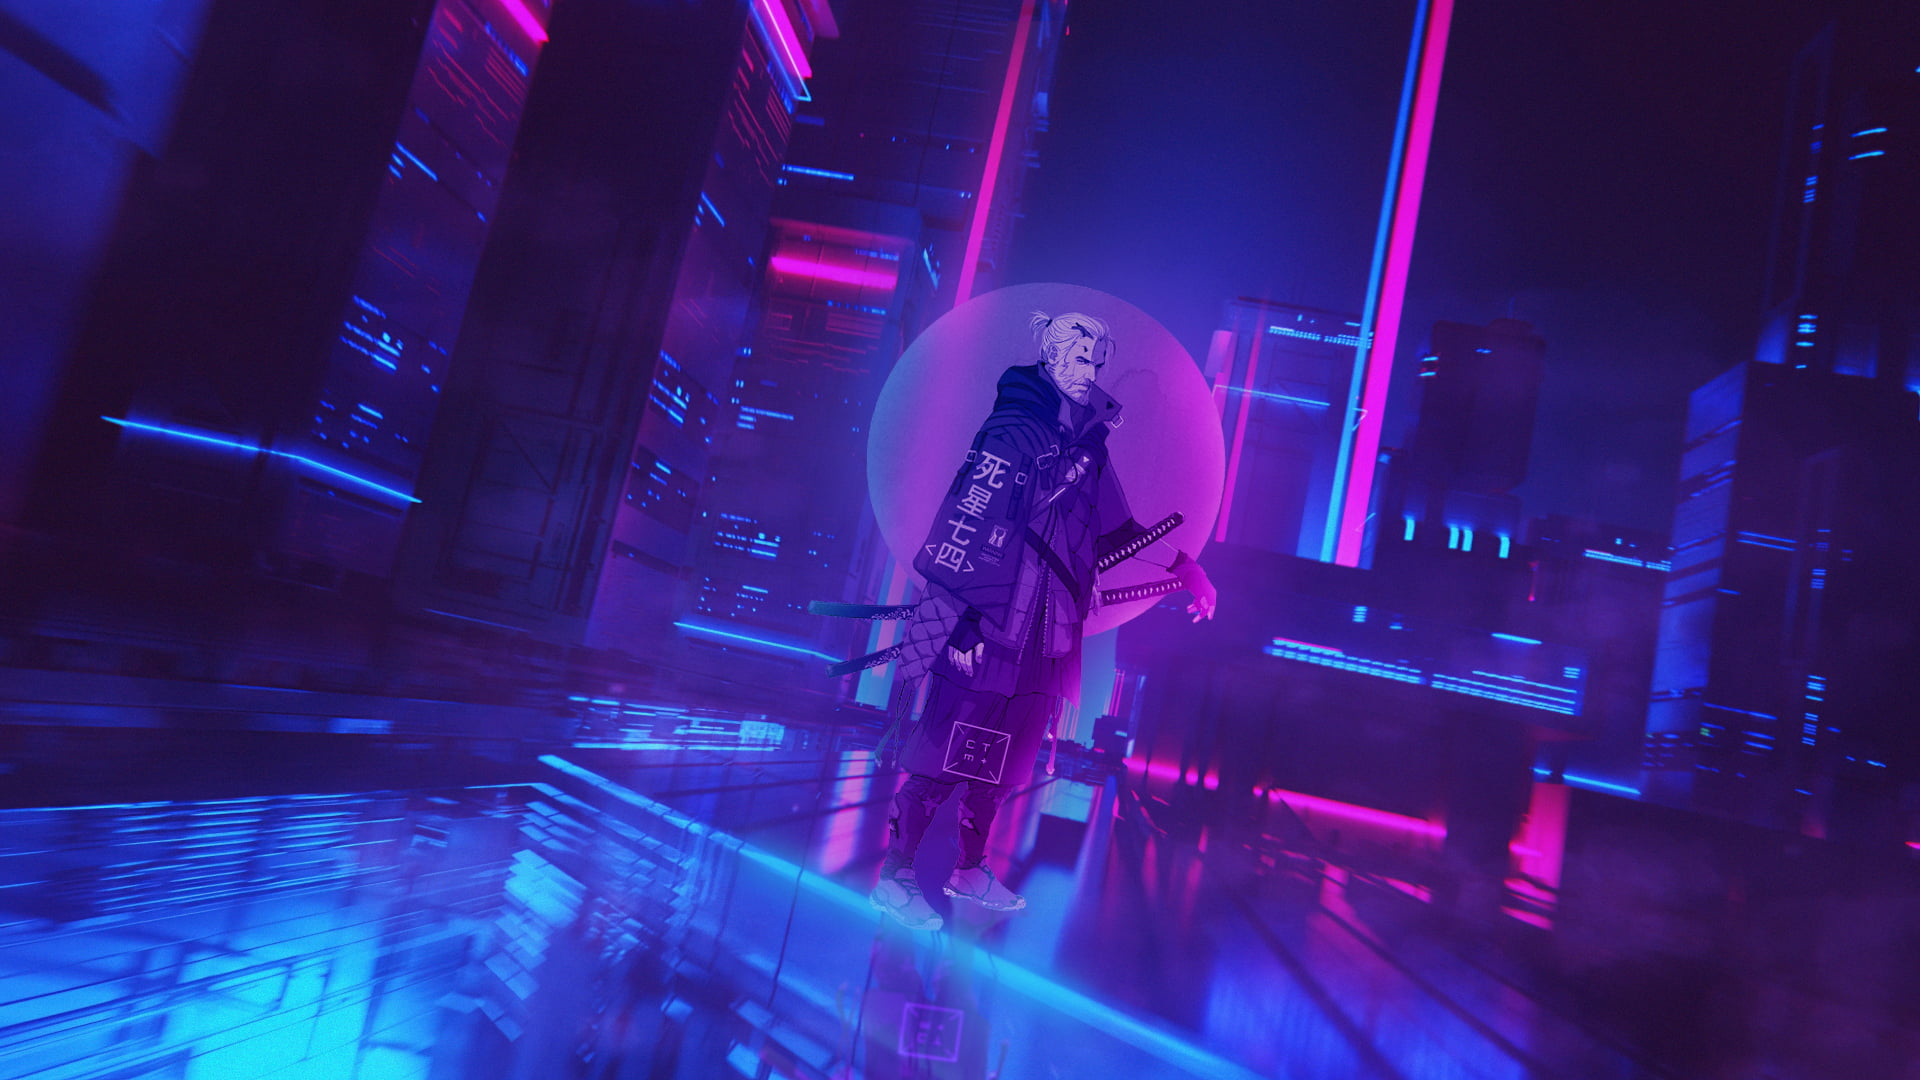 A man walking through the city at night - Cyberpunk